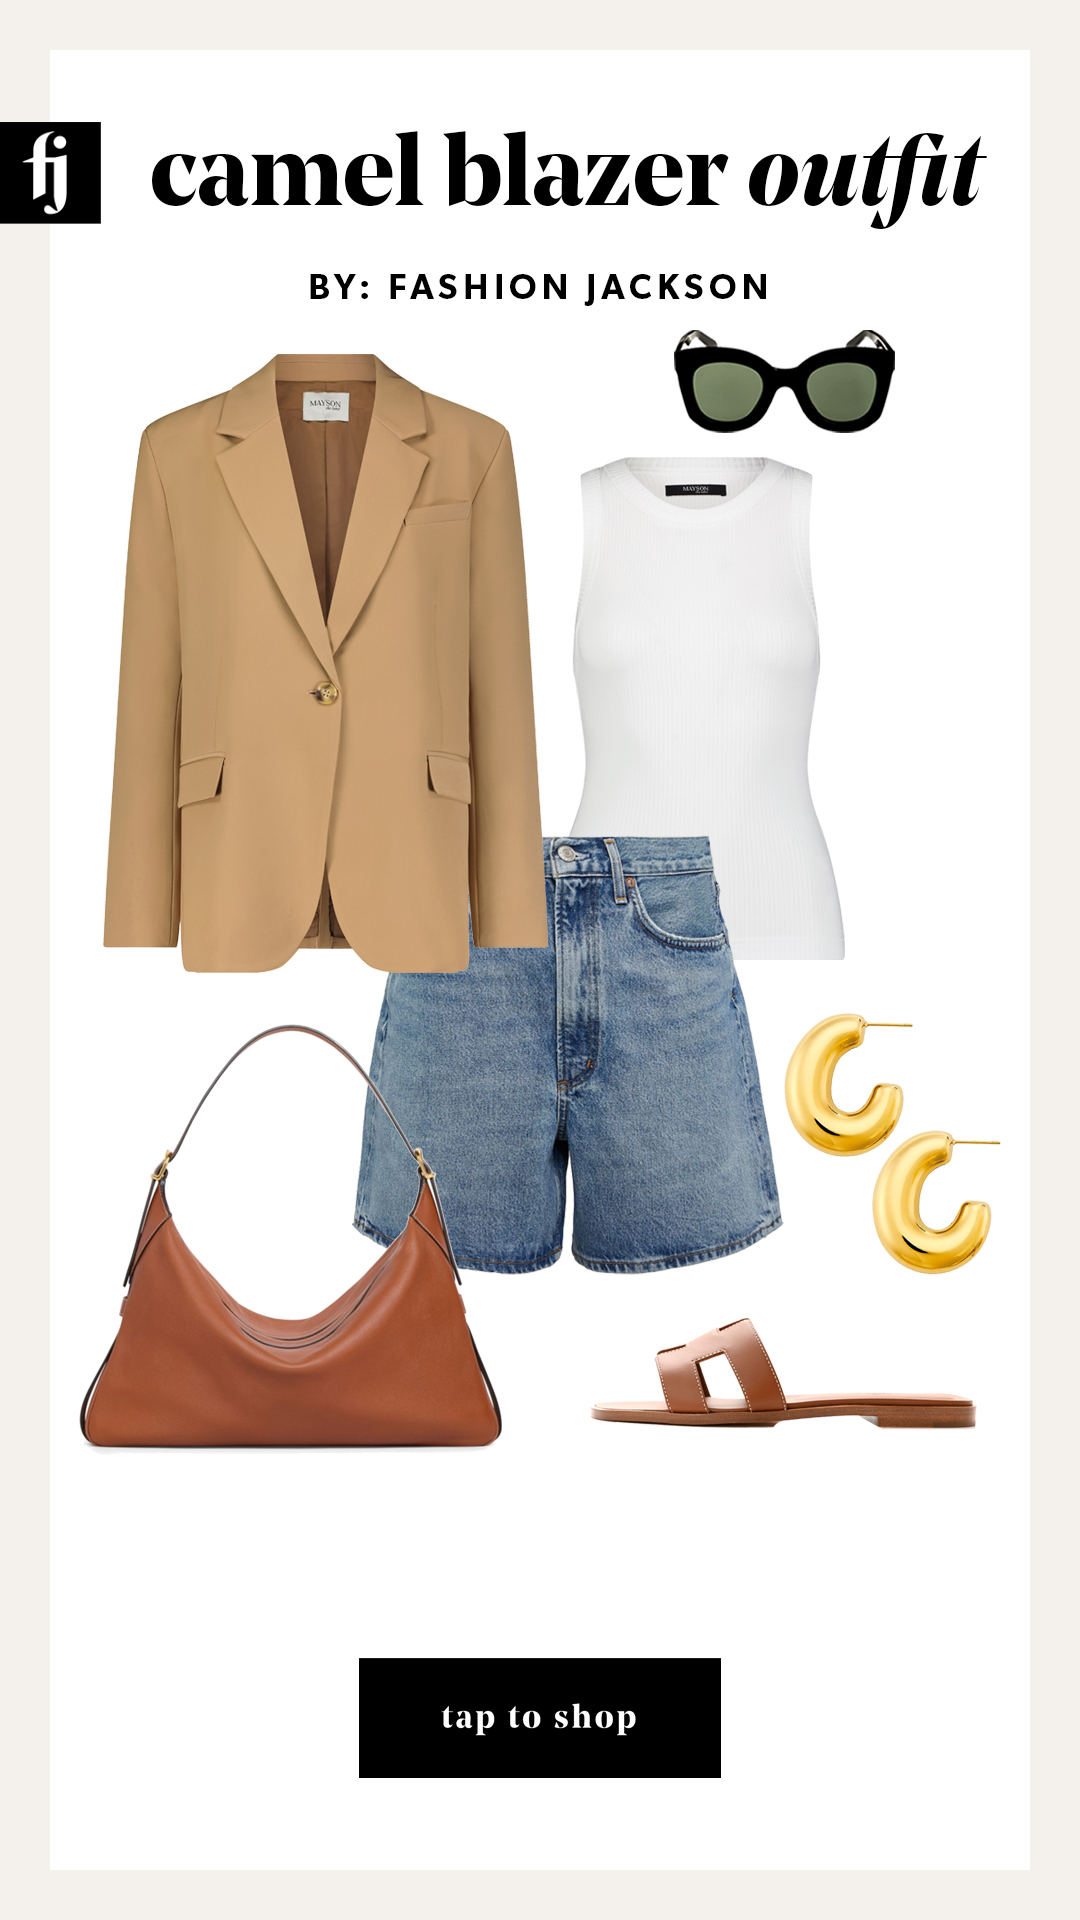 camel blazer outfit idea with denim shorts